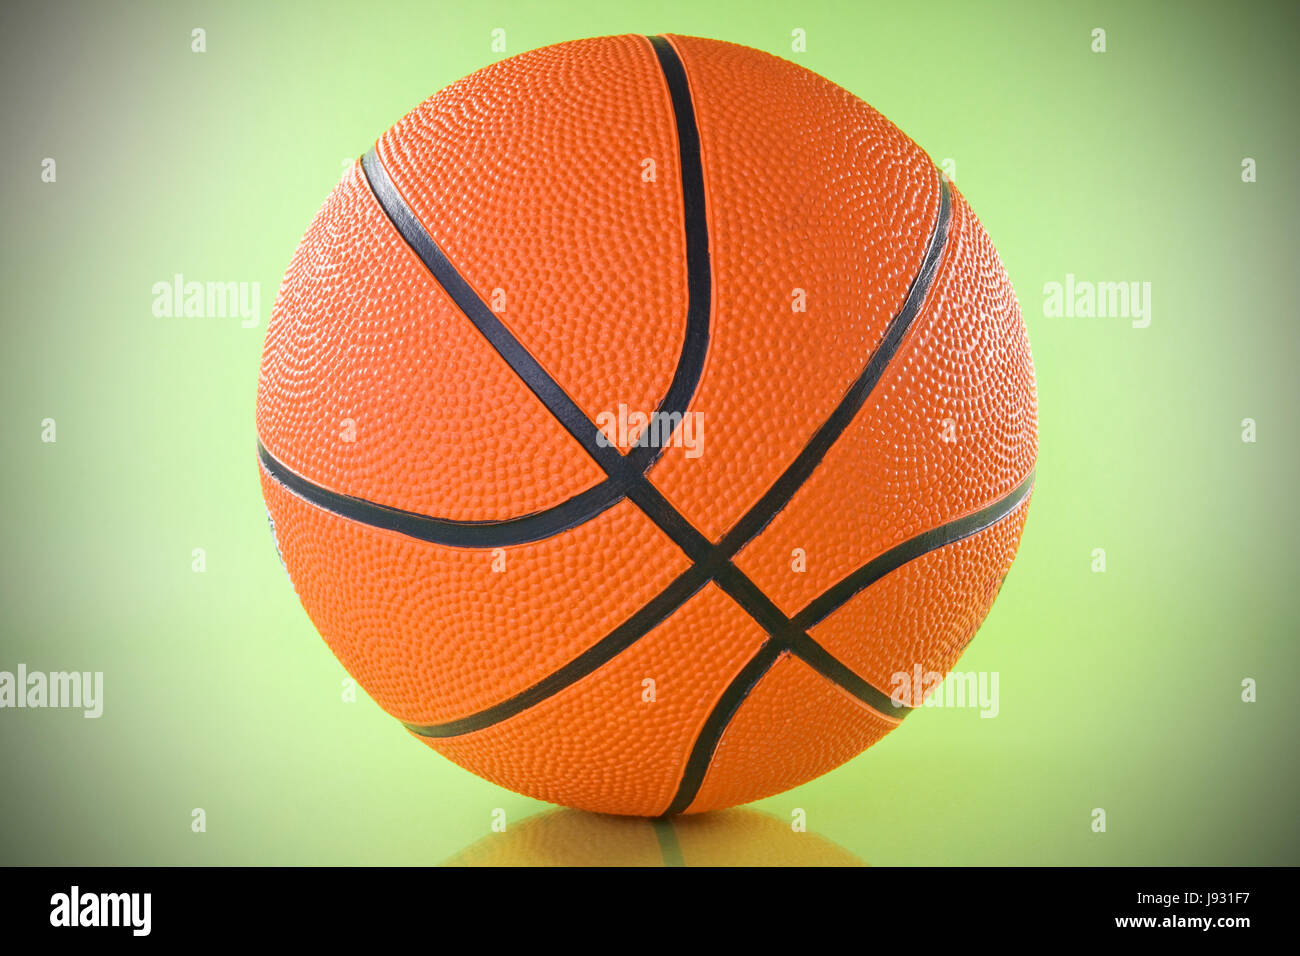 sport, sports, ball, basket, circle, basketball, rubber, orange, object, Stock Photo